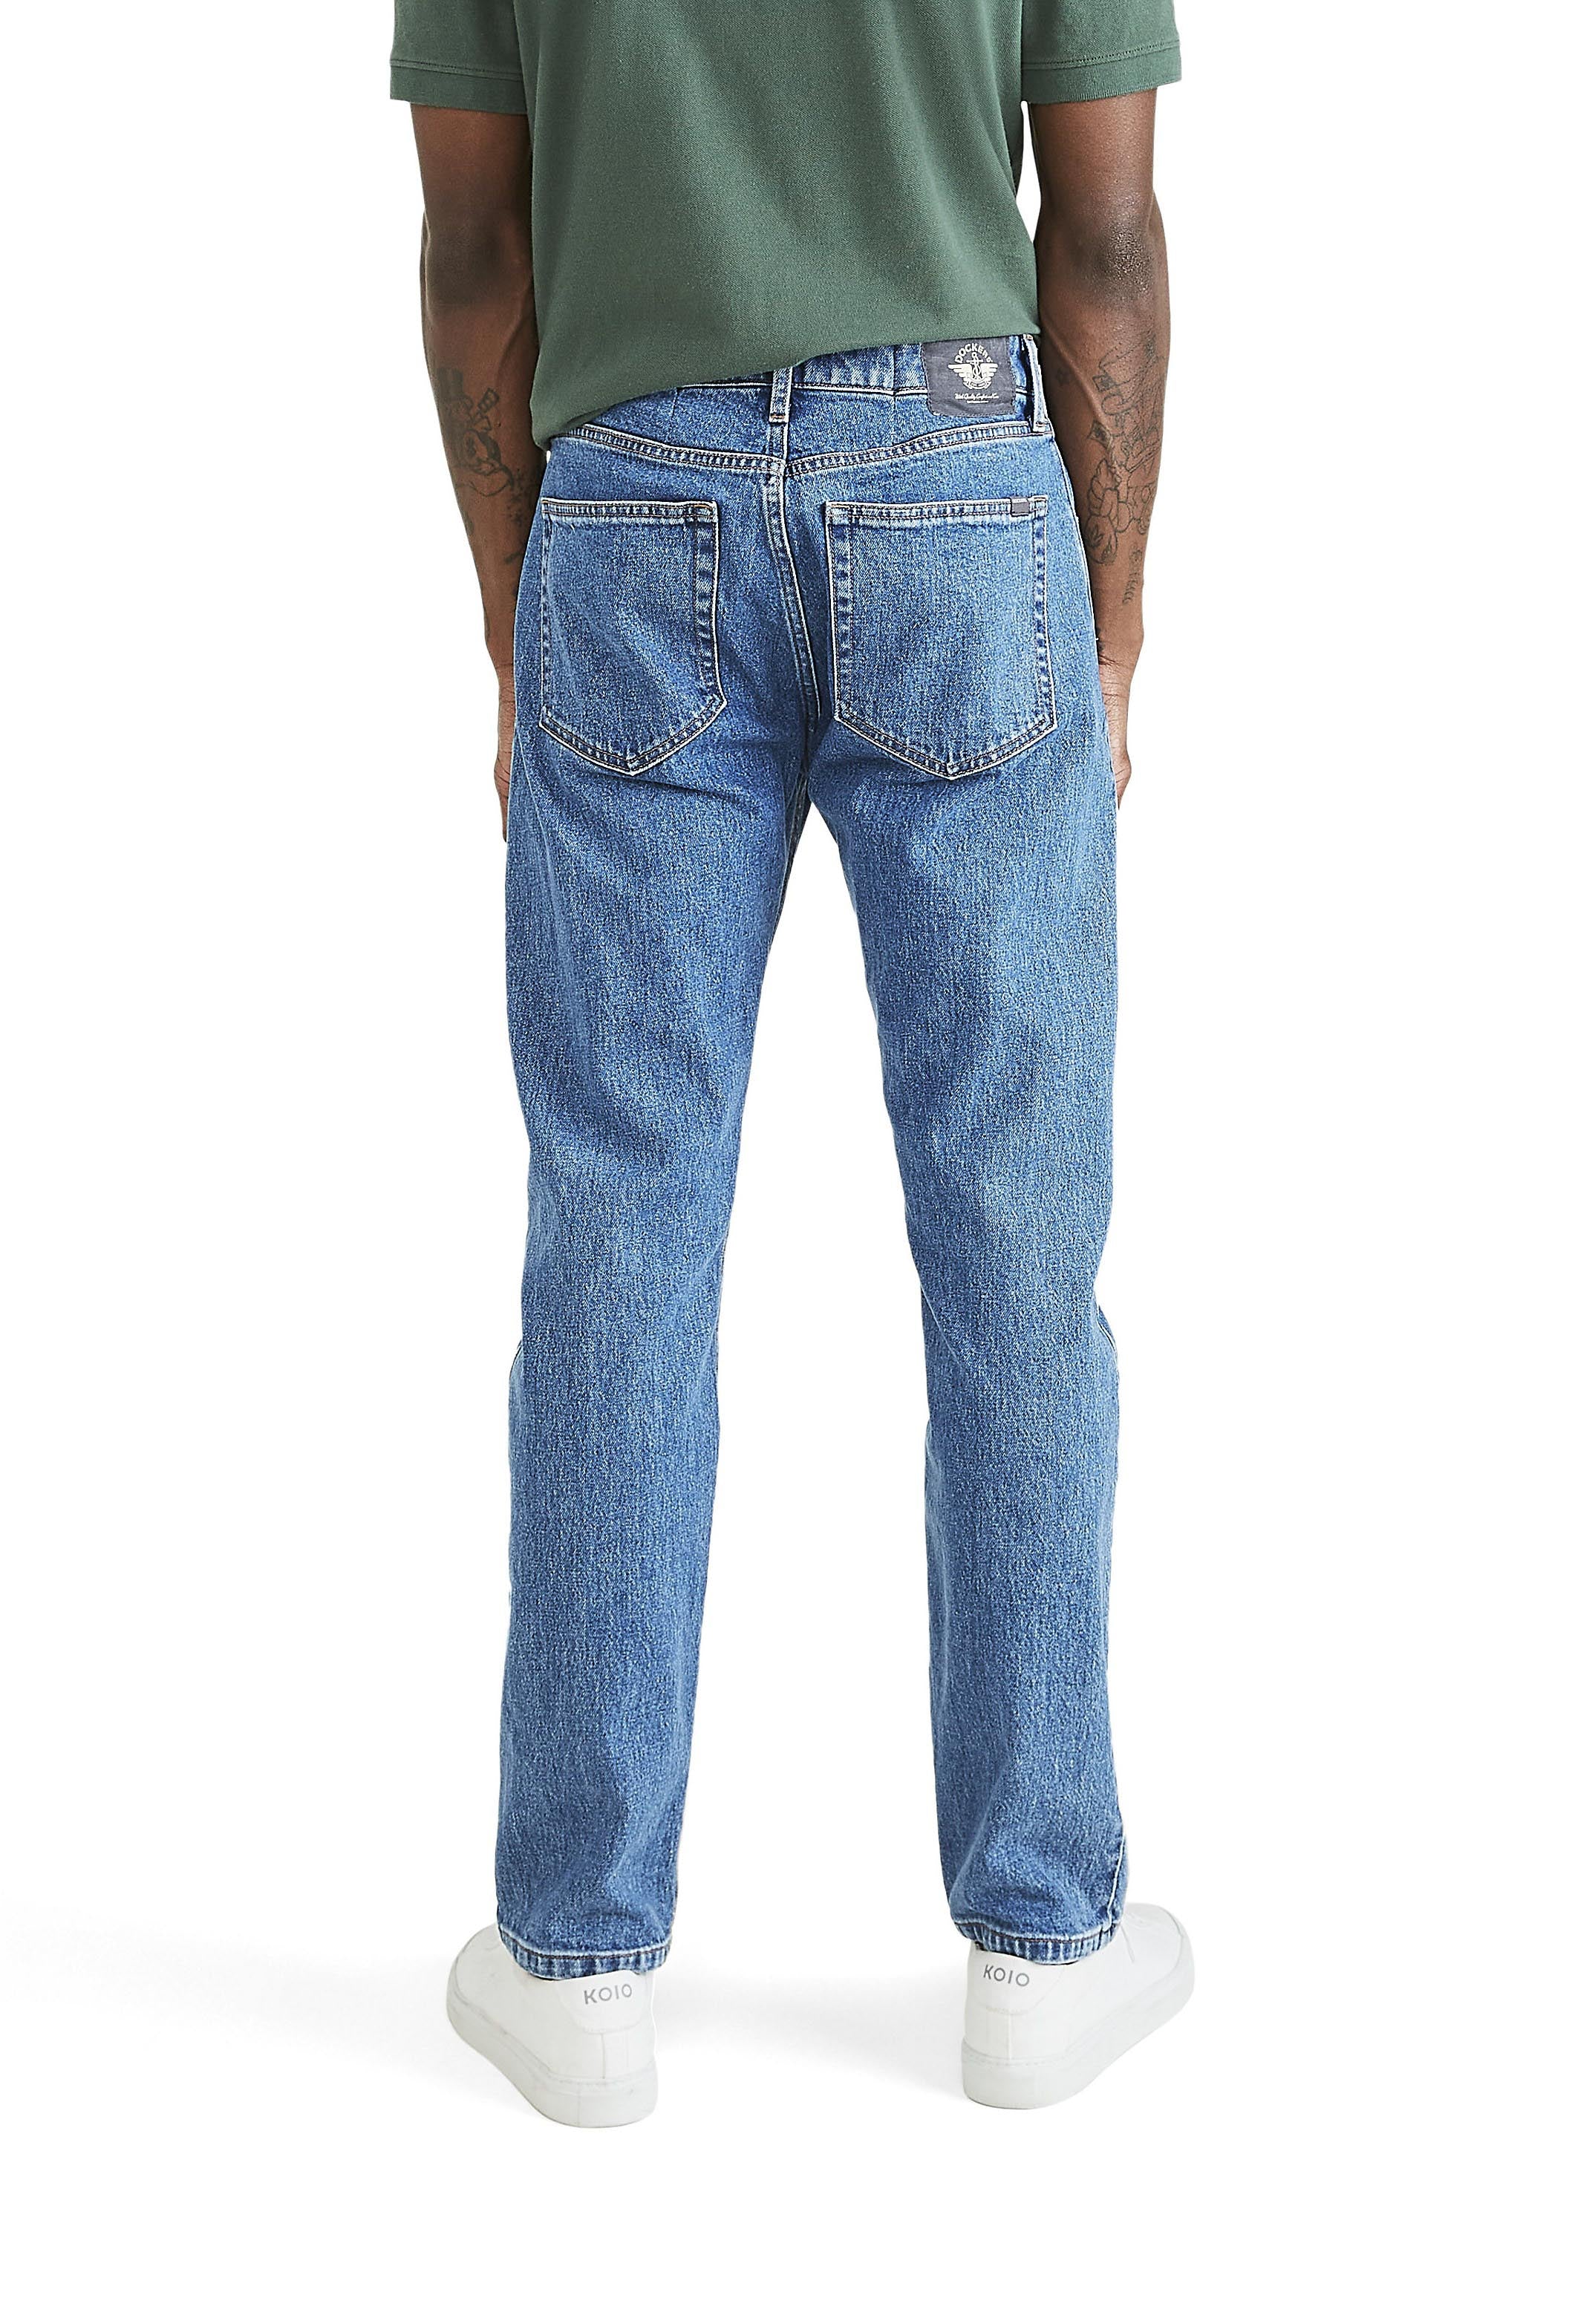 pantalones-jeans-dockers-p-caballeros